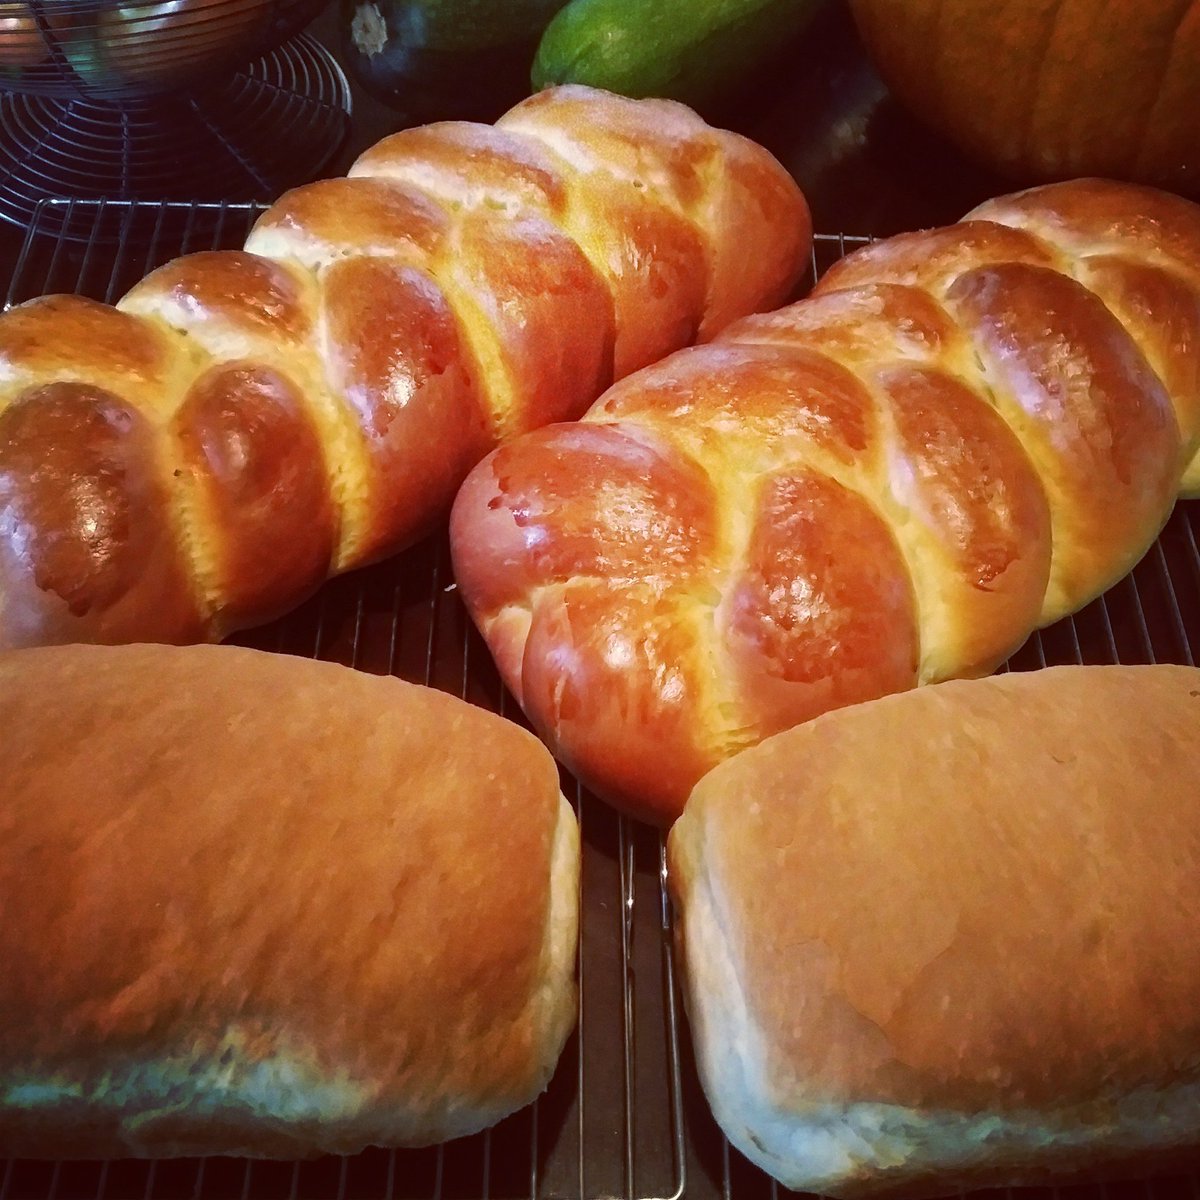 Fresh bread. Bon Appetit! 
#homestead #homemade #bread #NB #selfsufficient #photography #fall